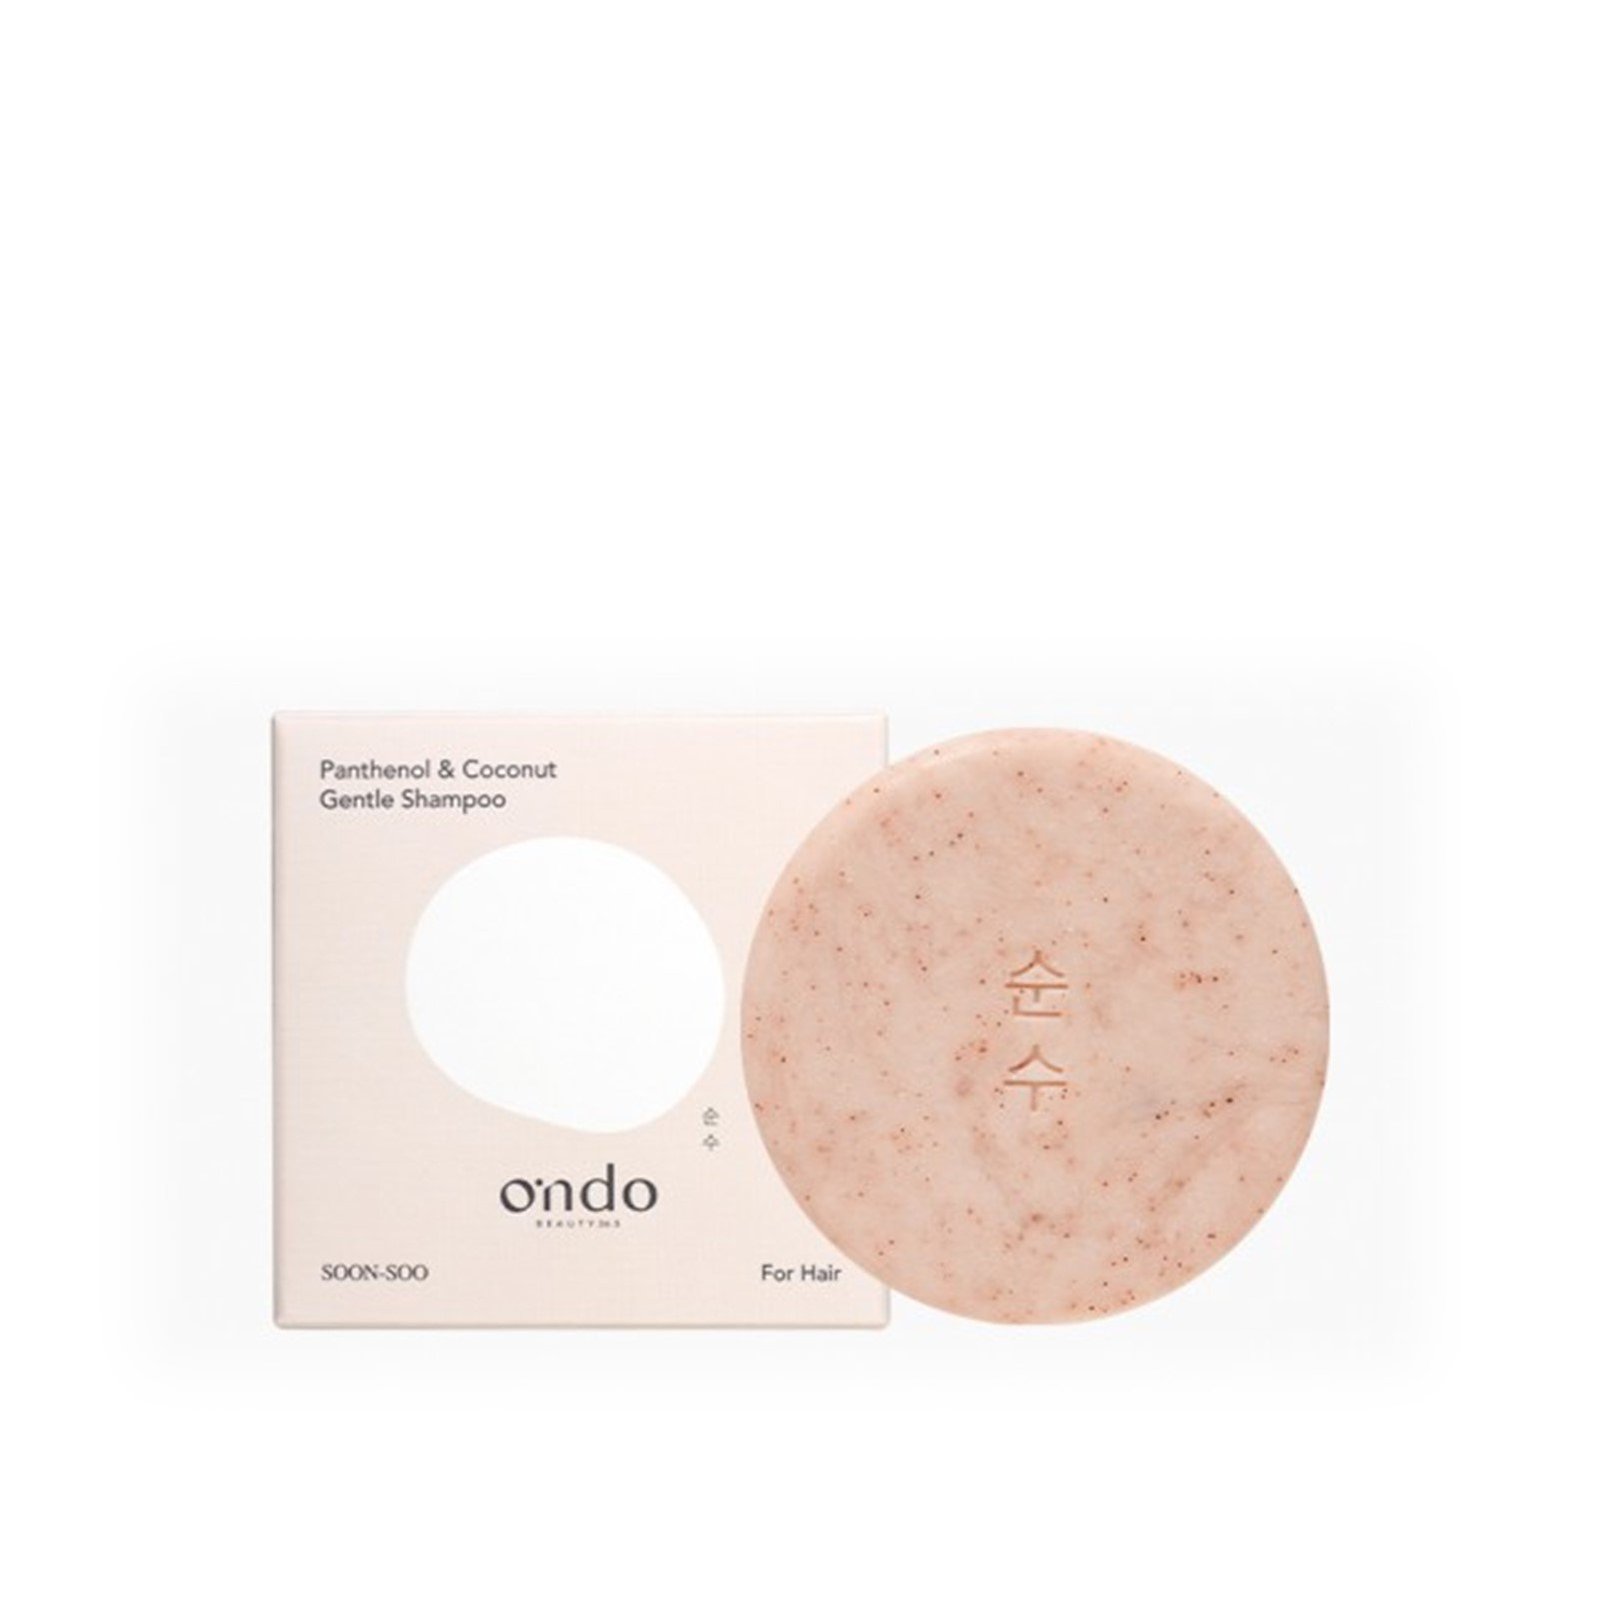 Ondo Beauty 36.5 Panthenol & Coconut Gentle Shampoo 70g (2.4 oz)